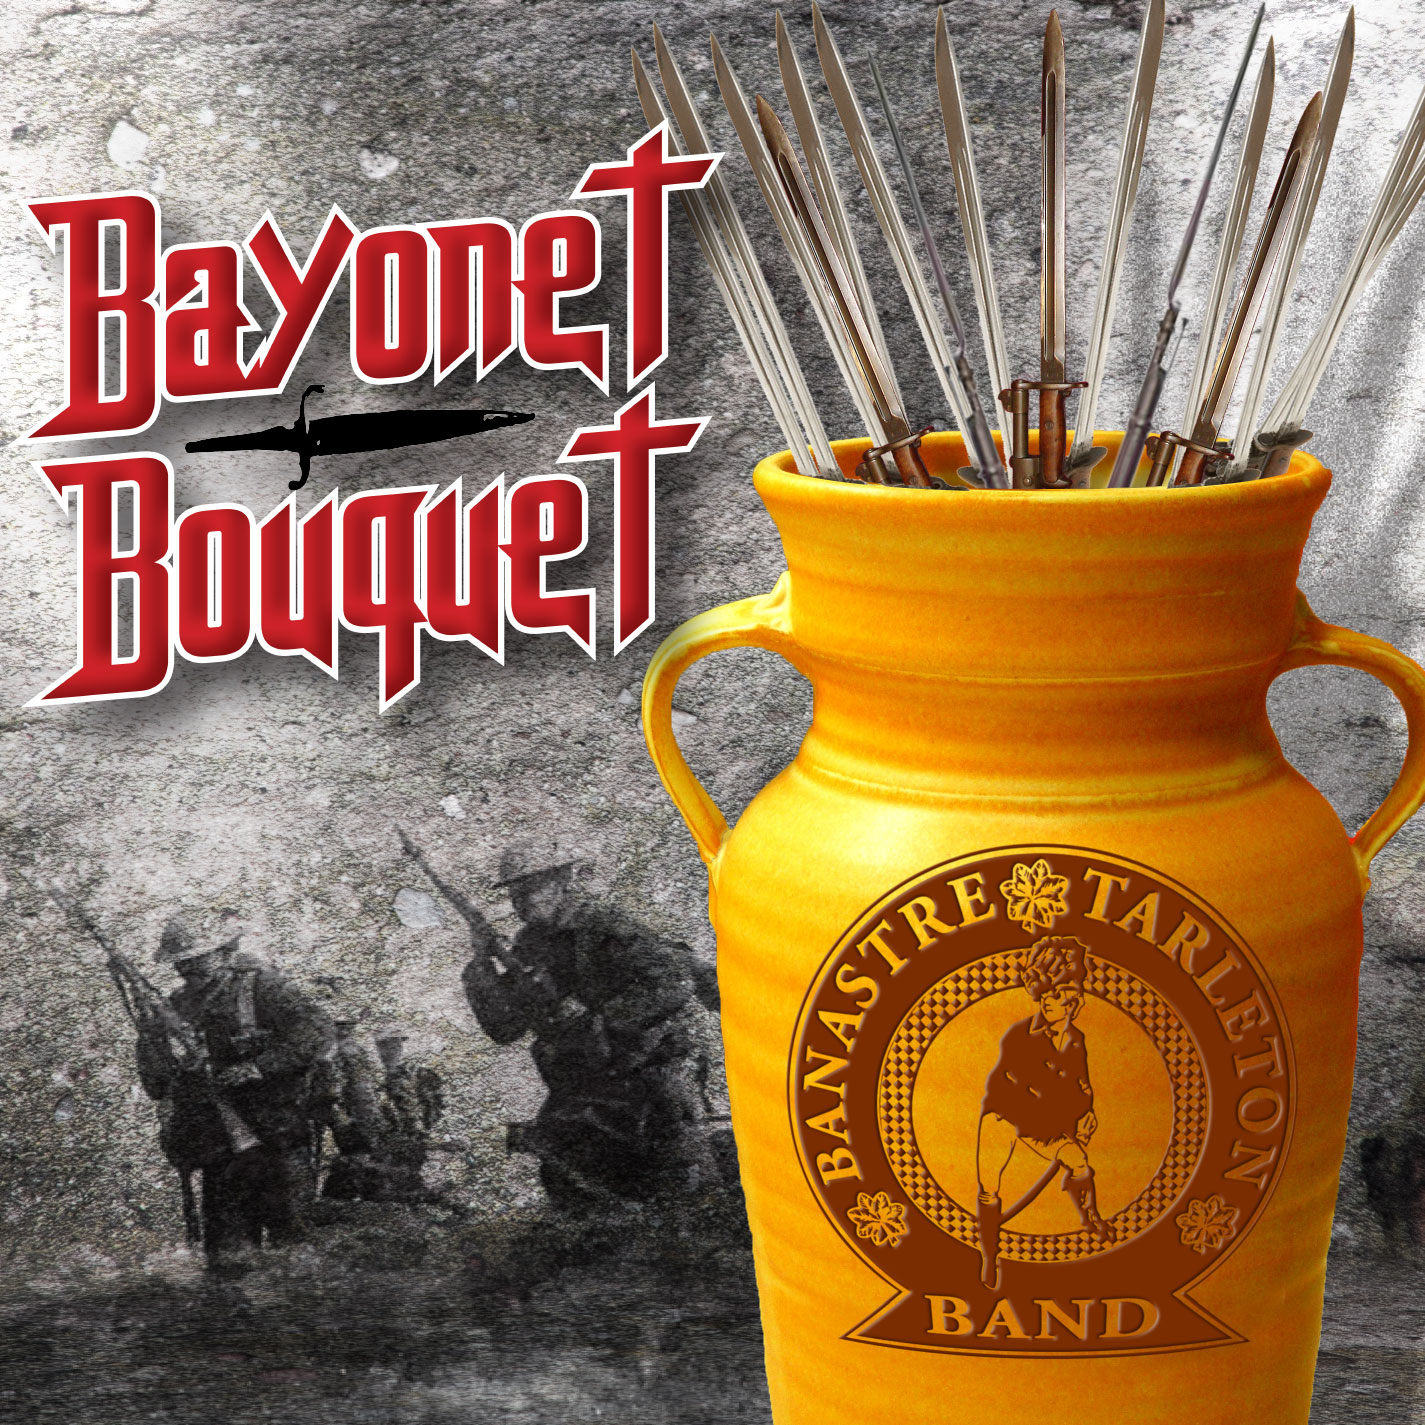 Bayonet Bouquet - Click Image to Close